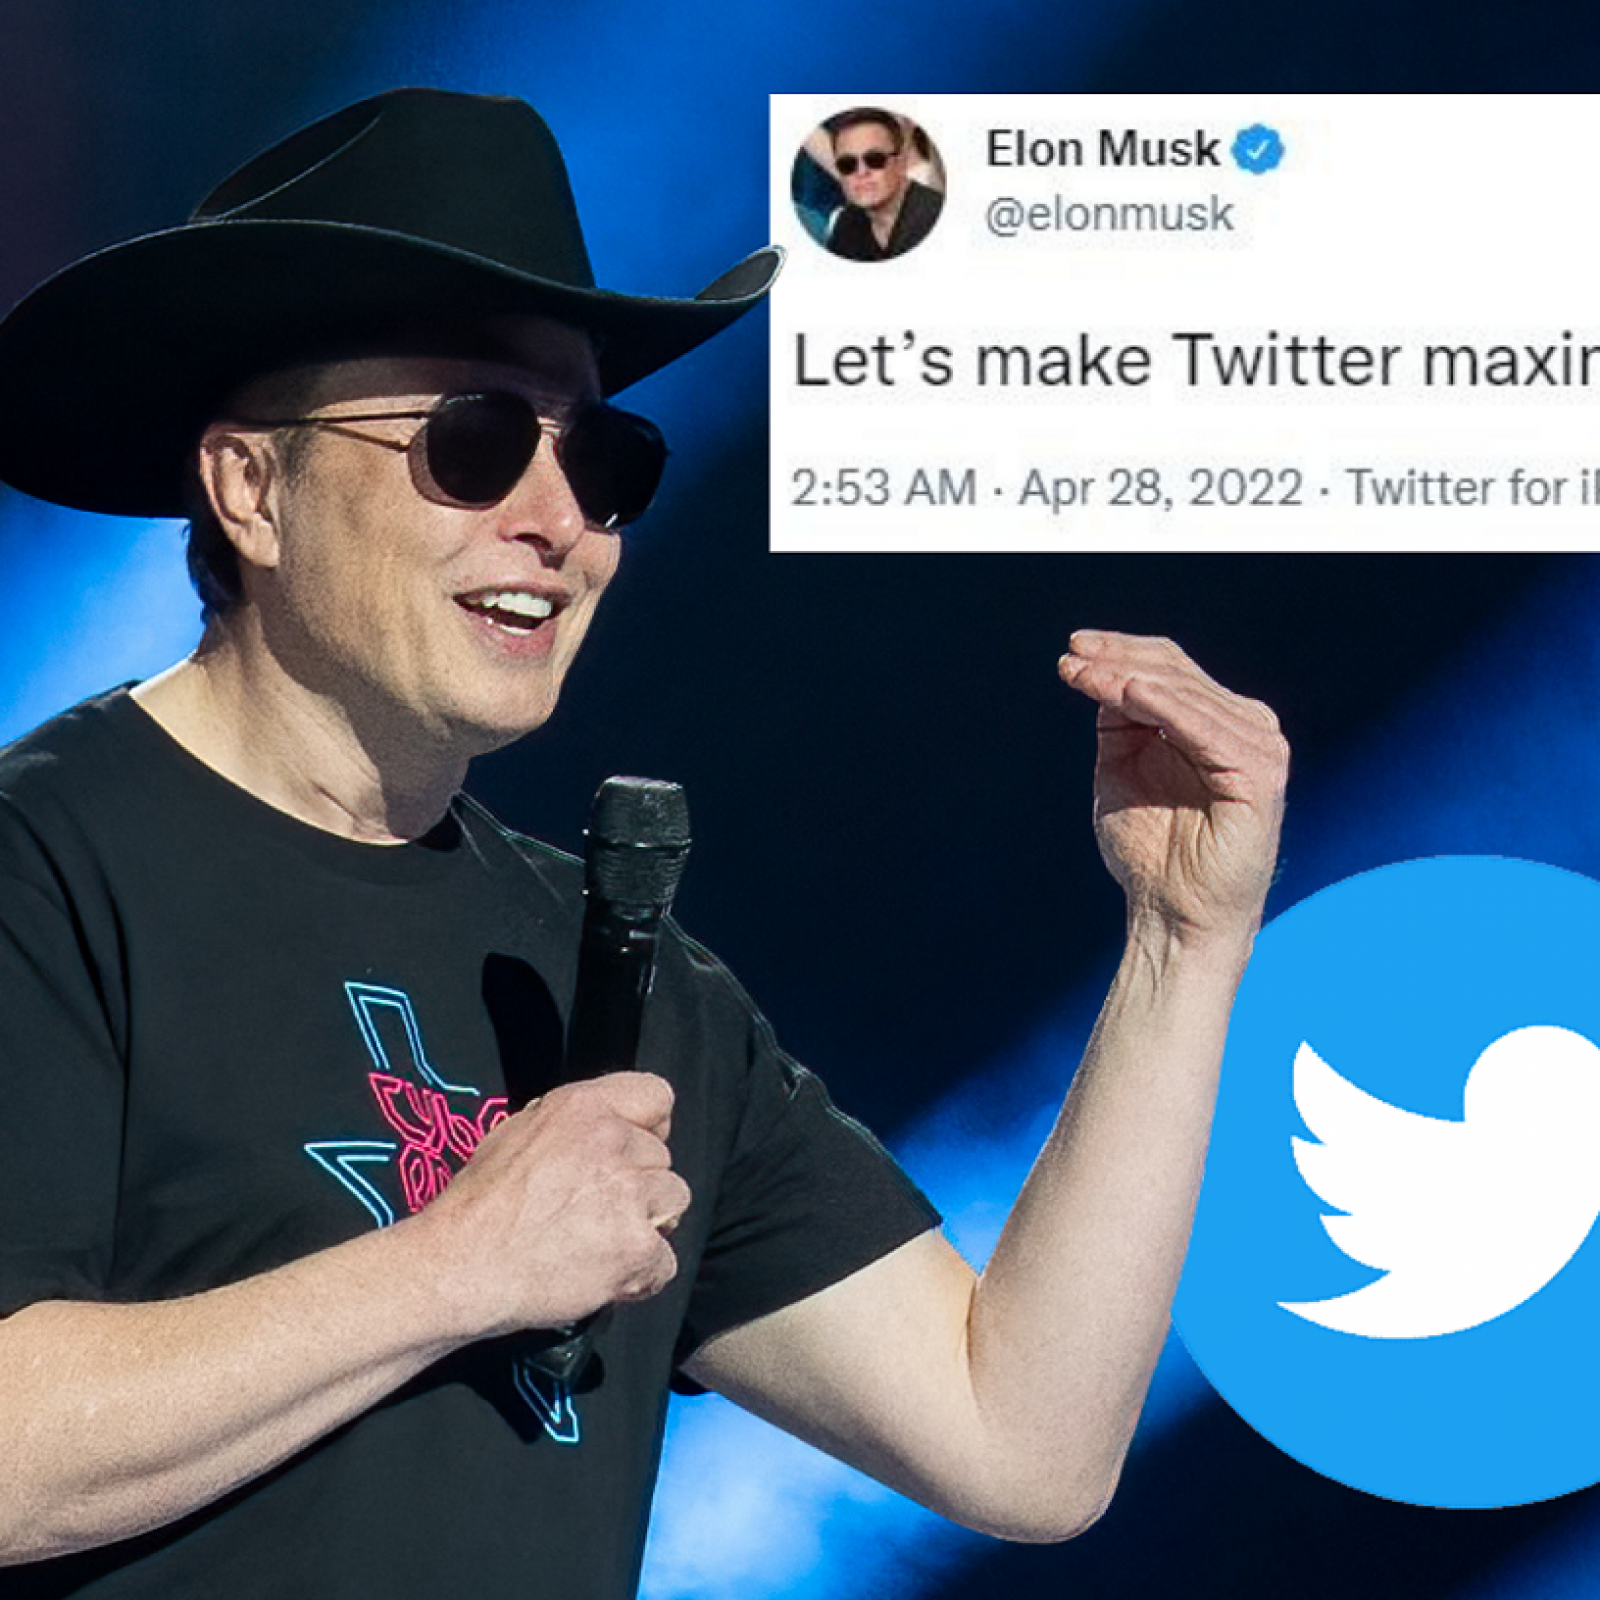 Elon Musk Goes on Joke Spree to Make Twitter 'Maximum Fun'